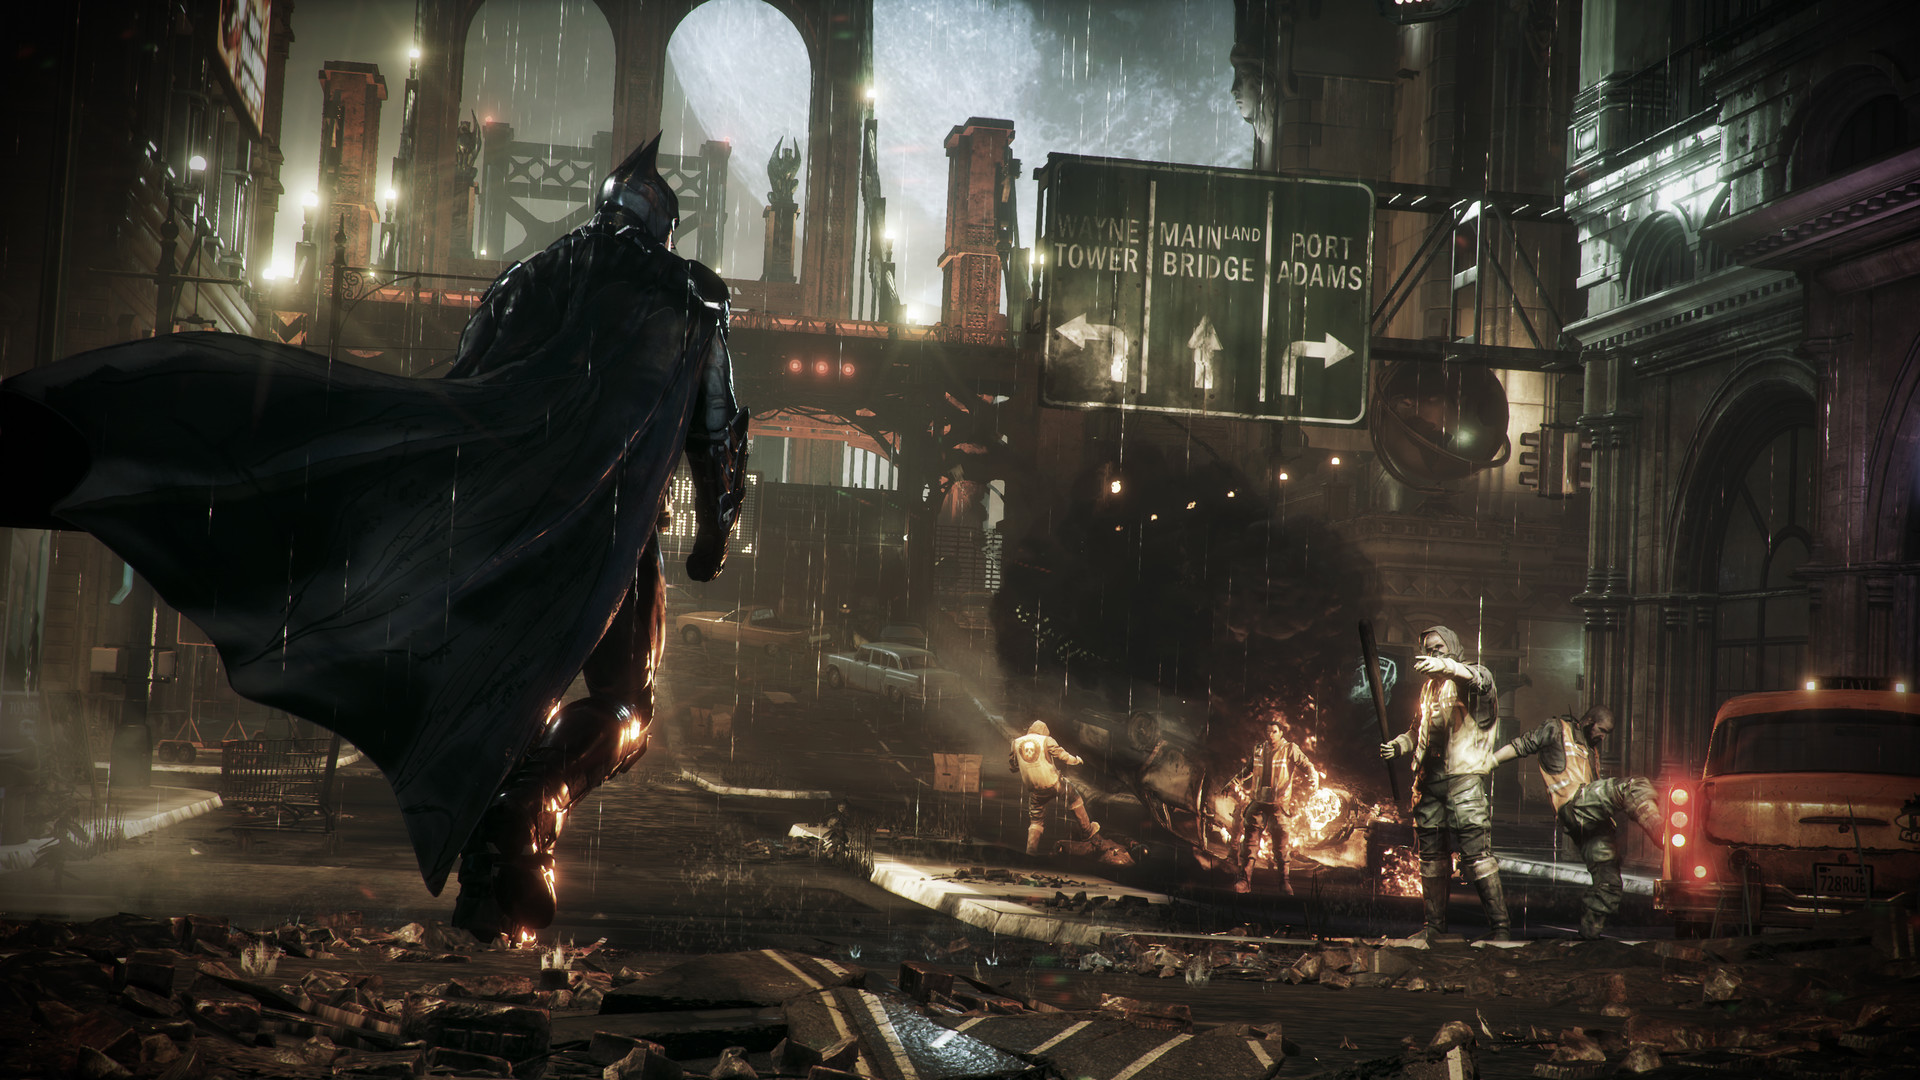 Steam DLC Page: Batman™: Arkham Knight